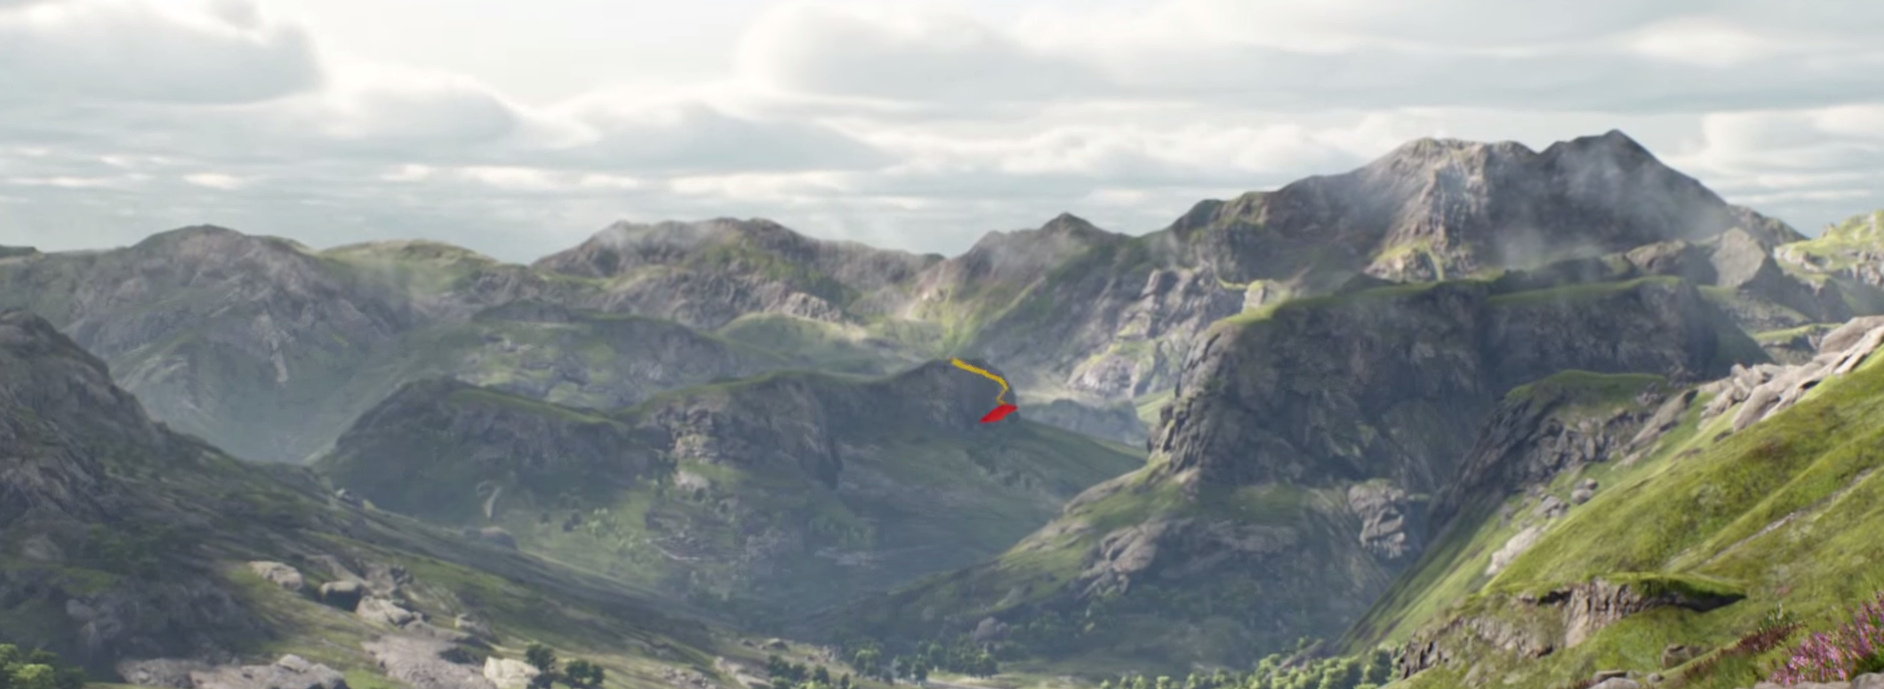 Unreal Engine 4 – Demonstration